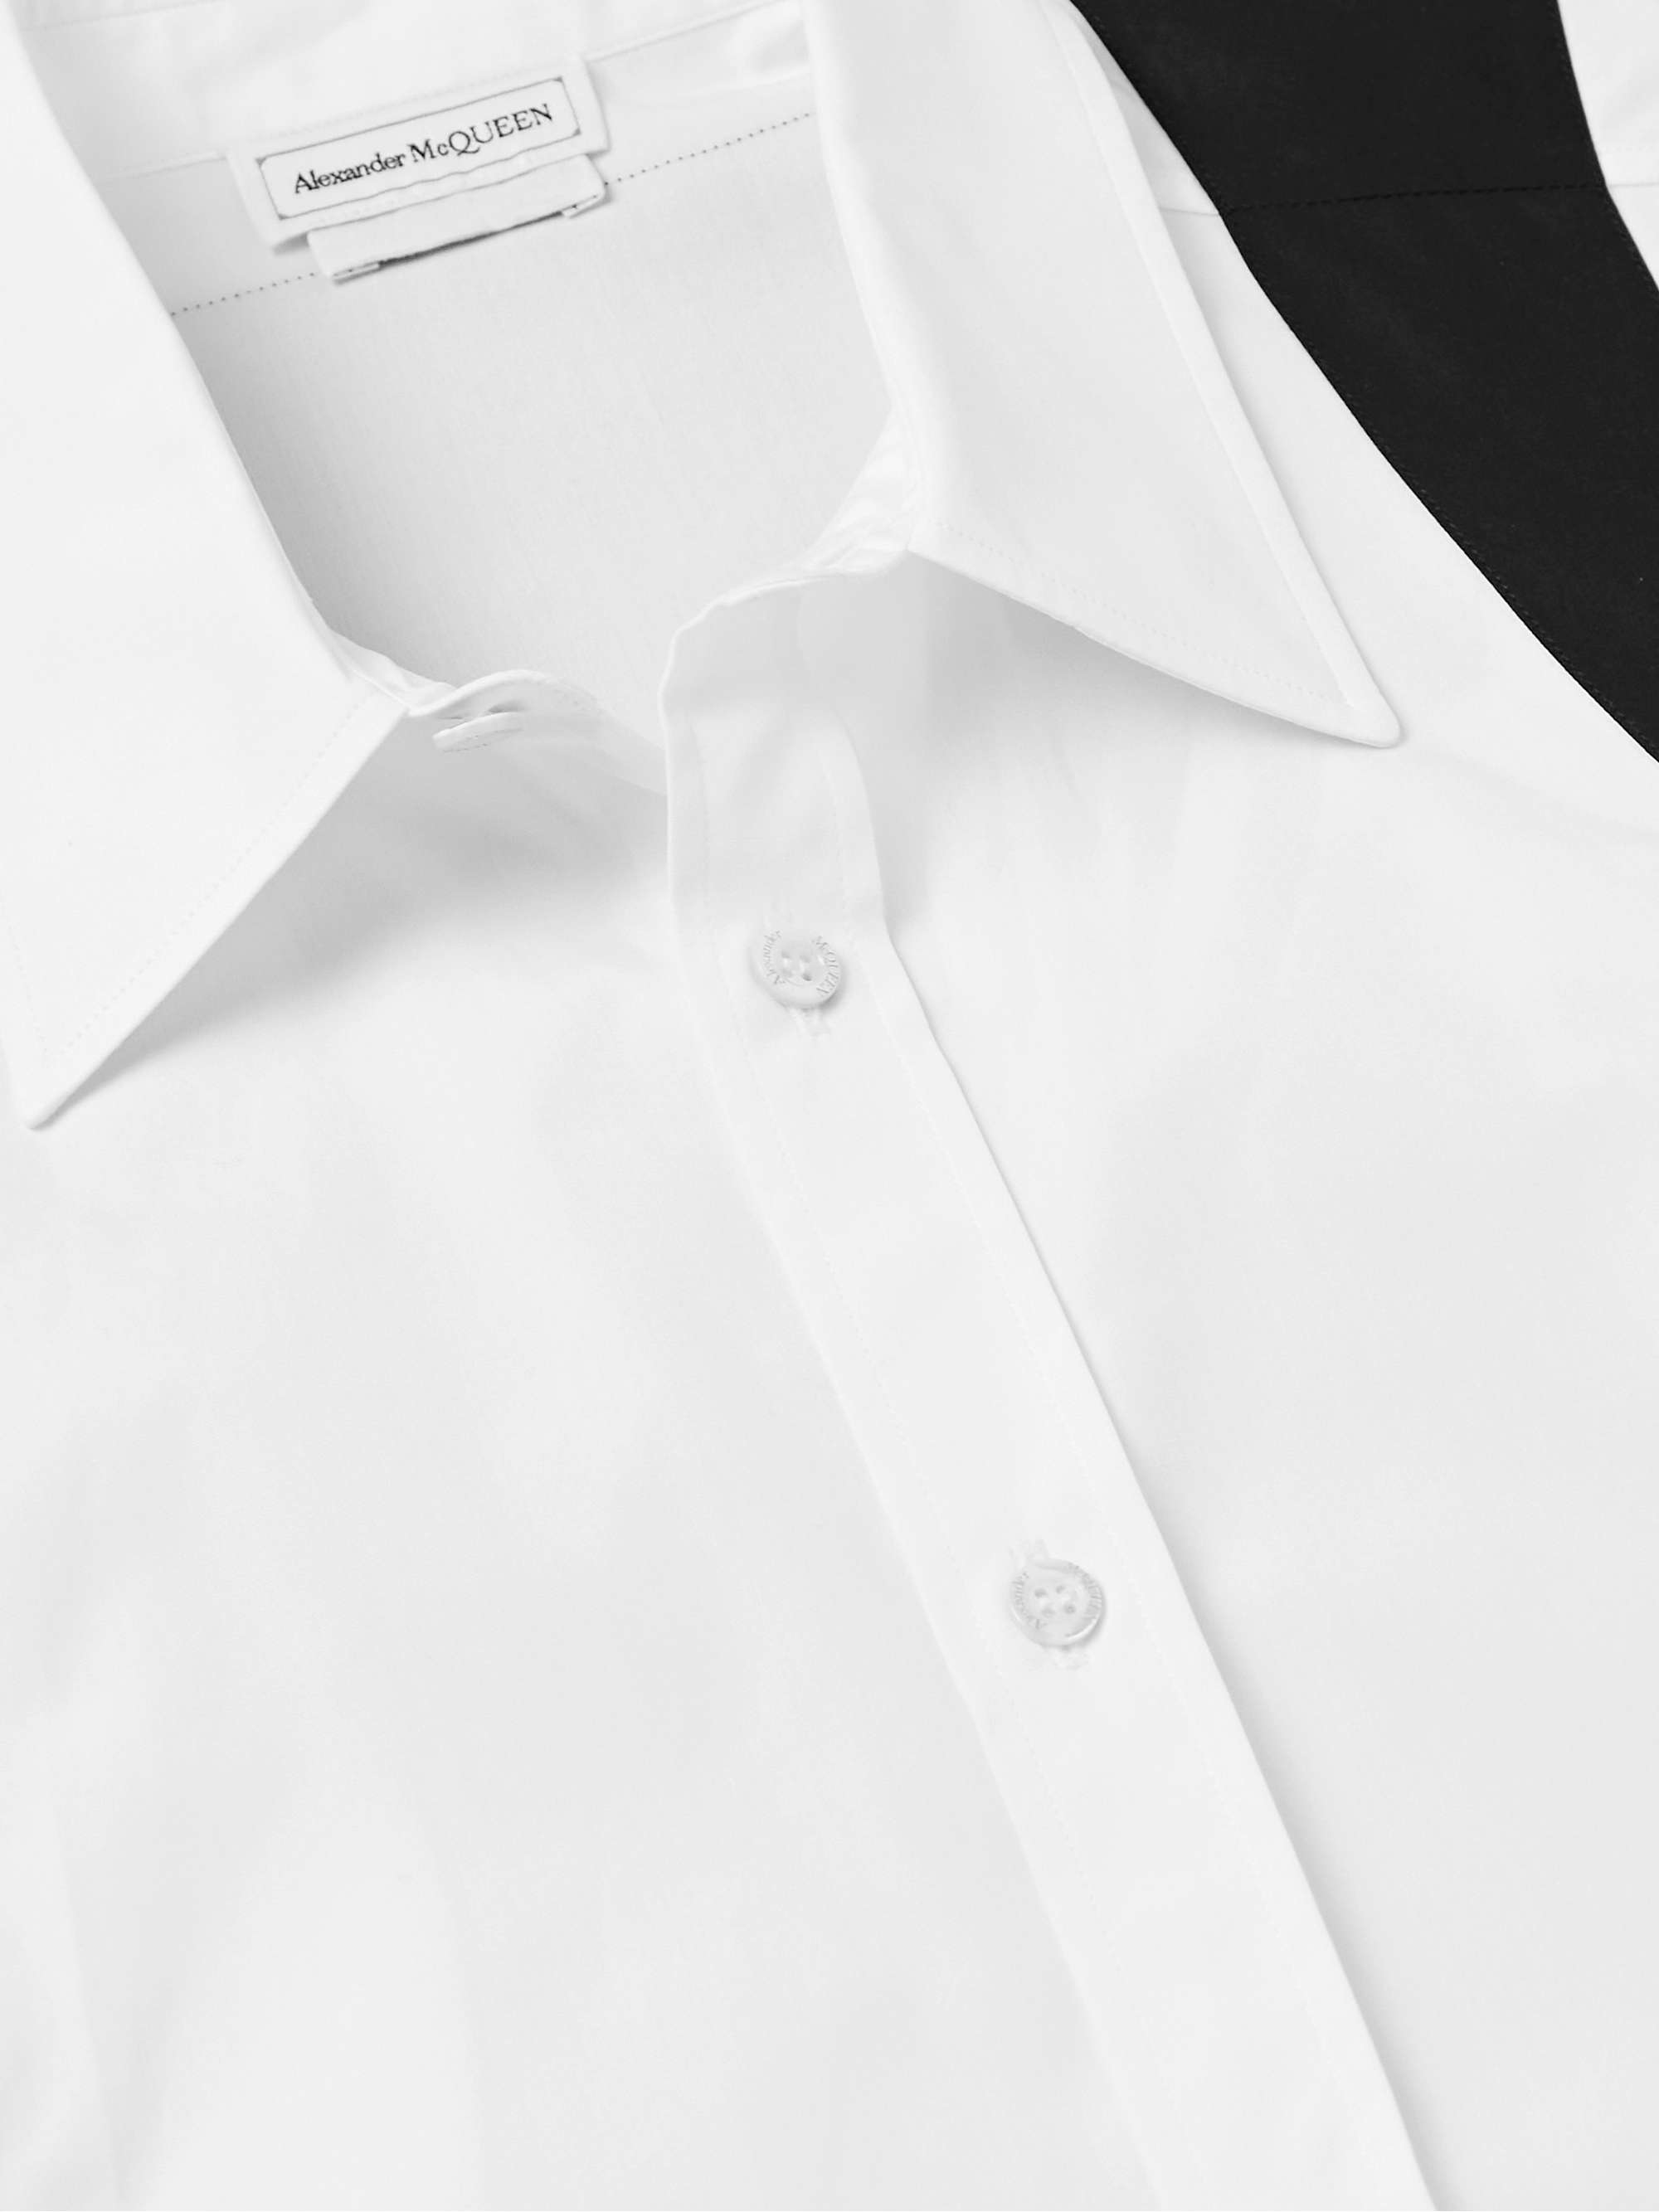 ALEXANDER MCQUEEN Slim-Fit Harness-Detailed Cotton-Poplin Shirt